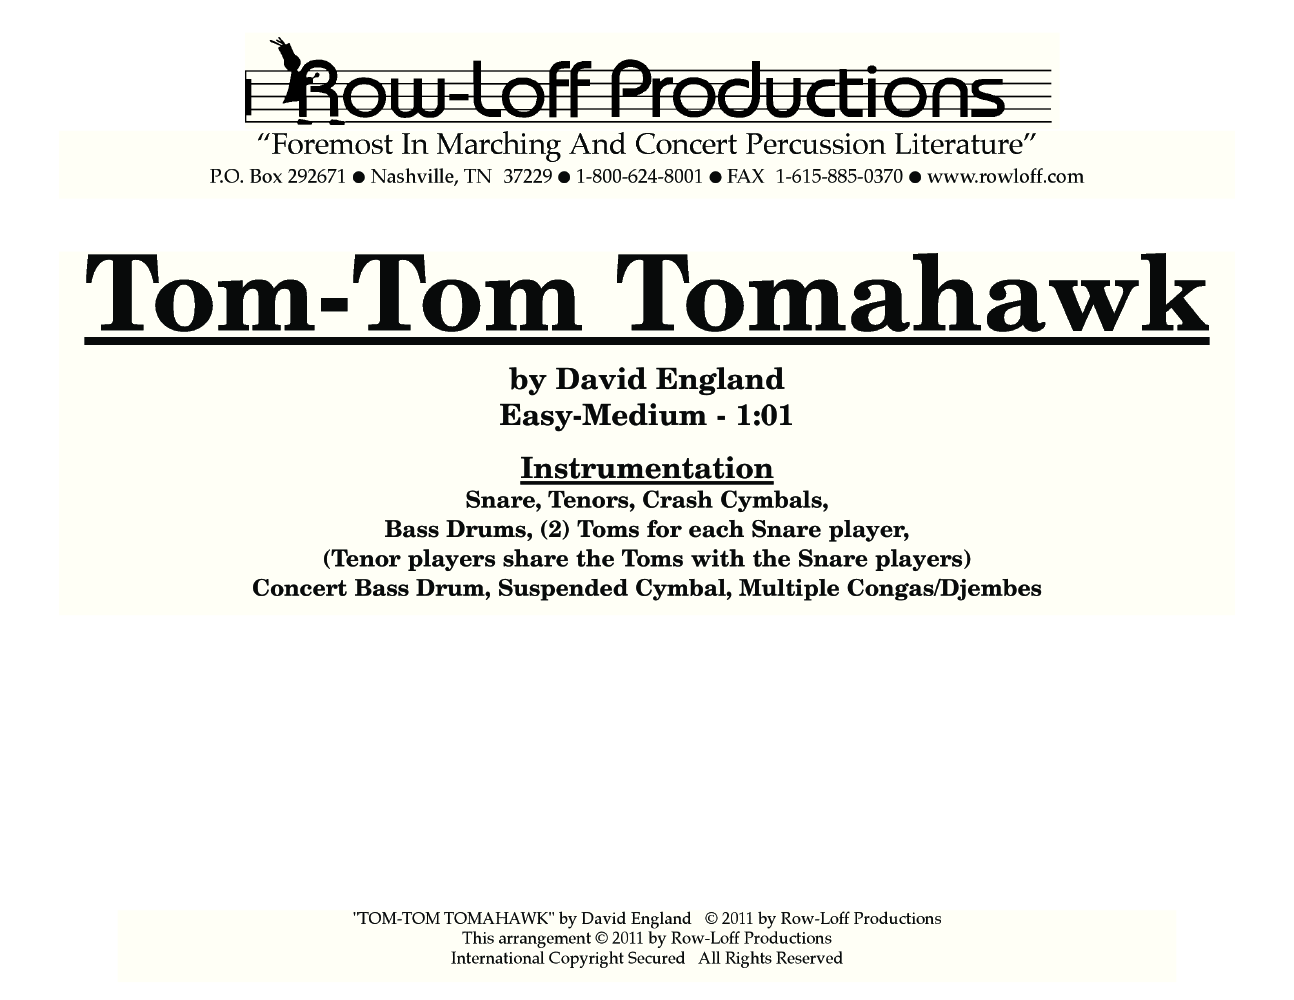 TOM TOM TOMAHAWK